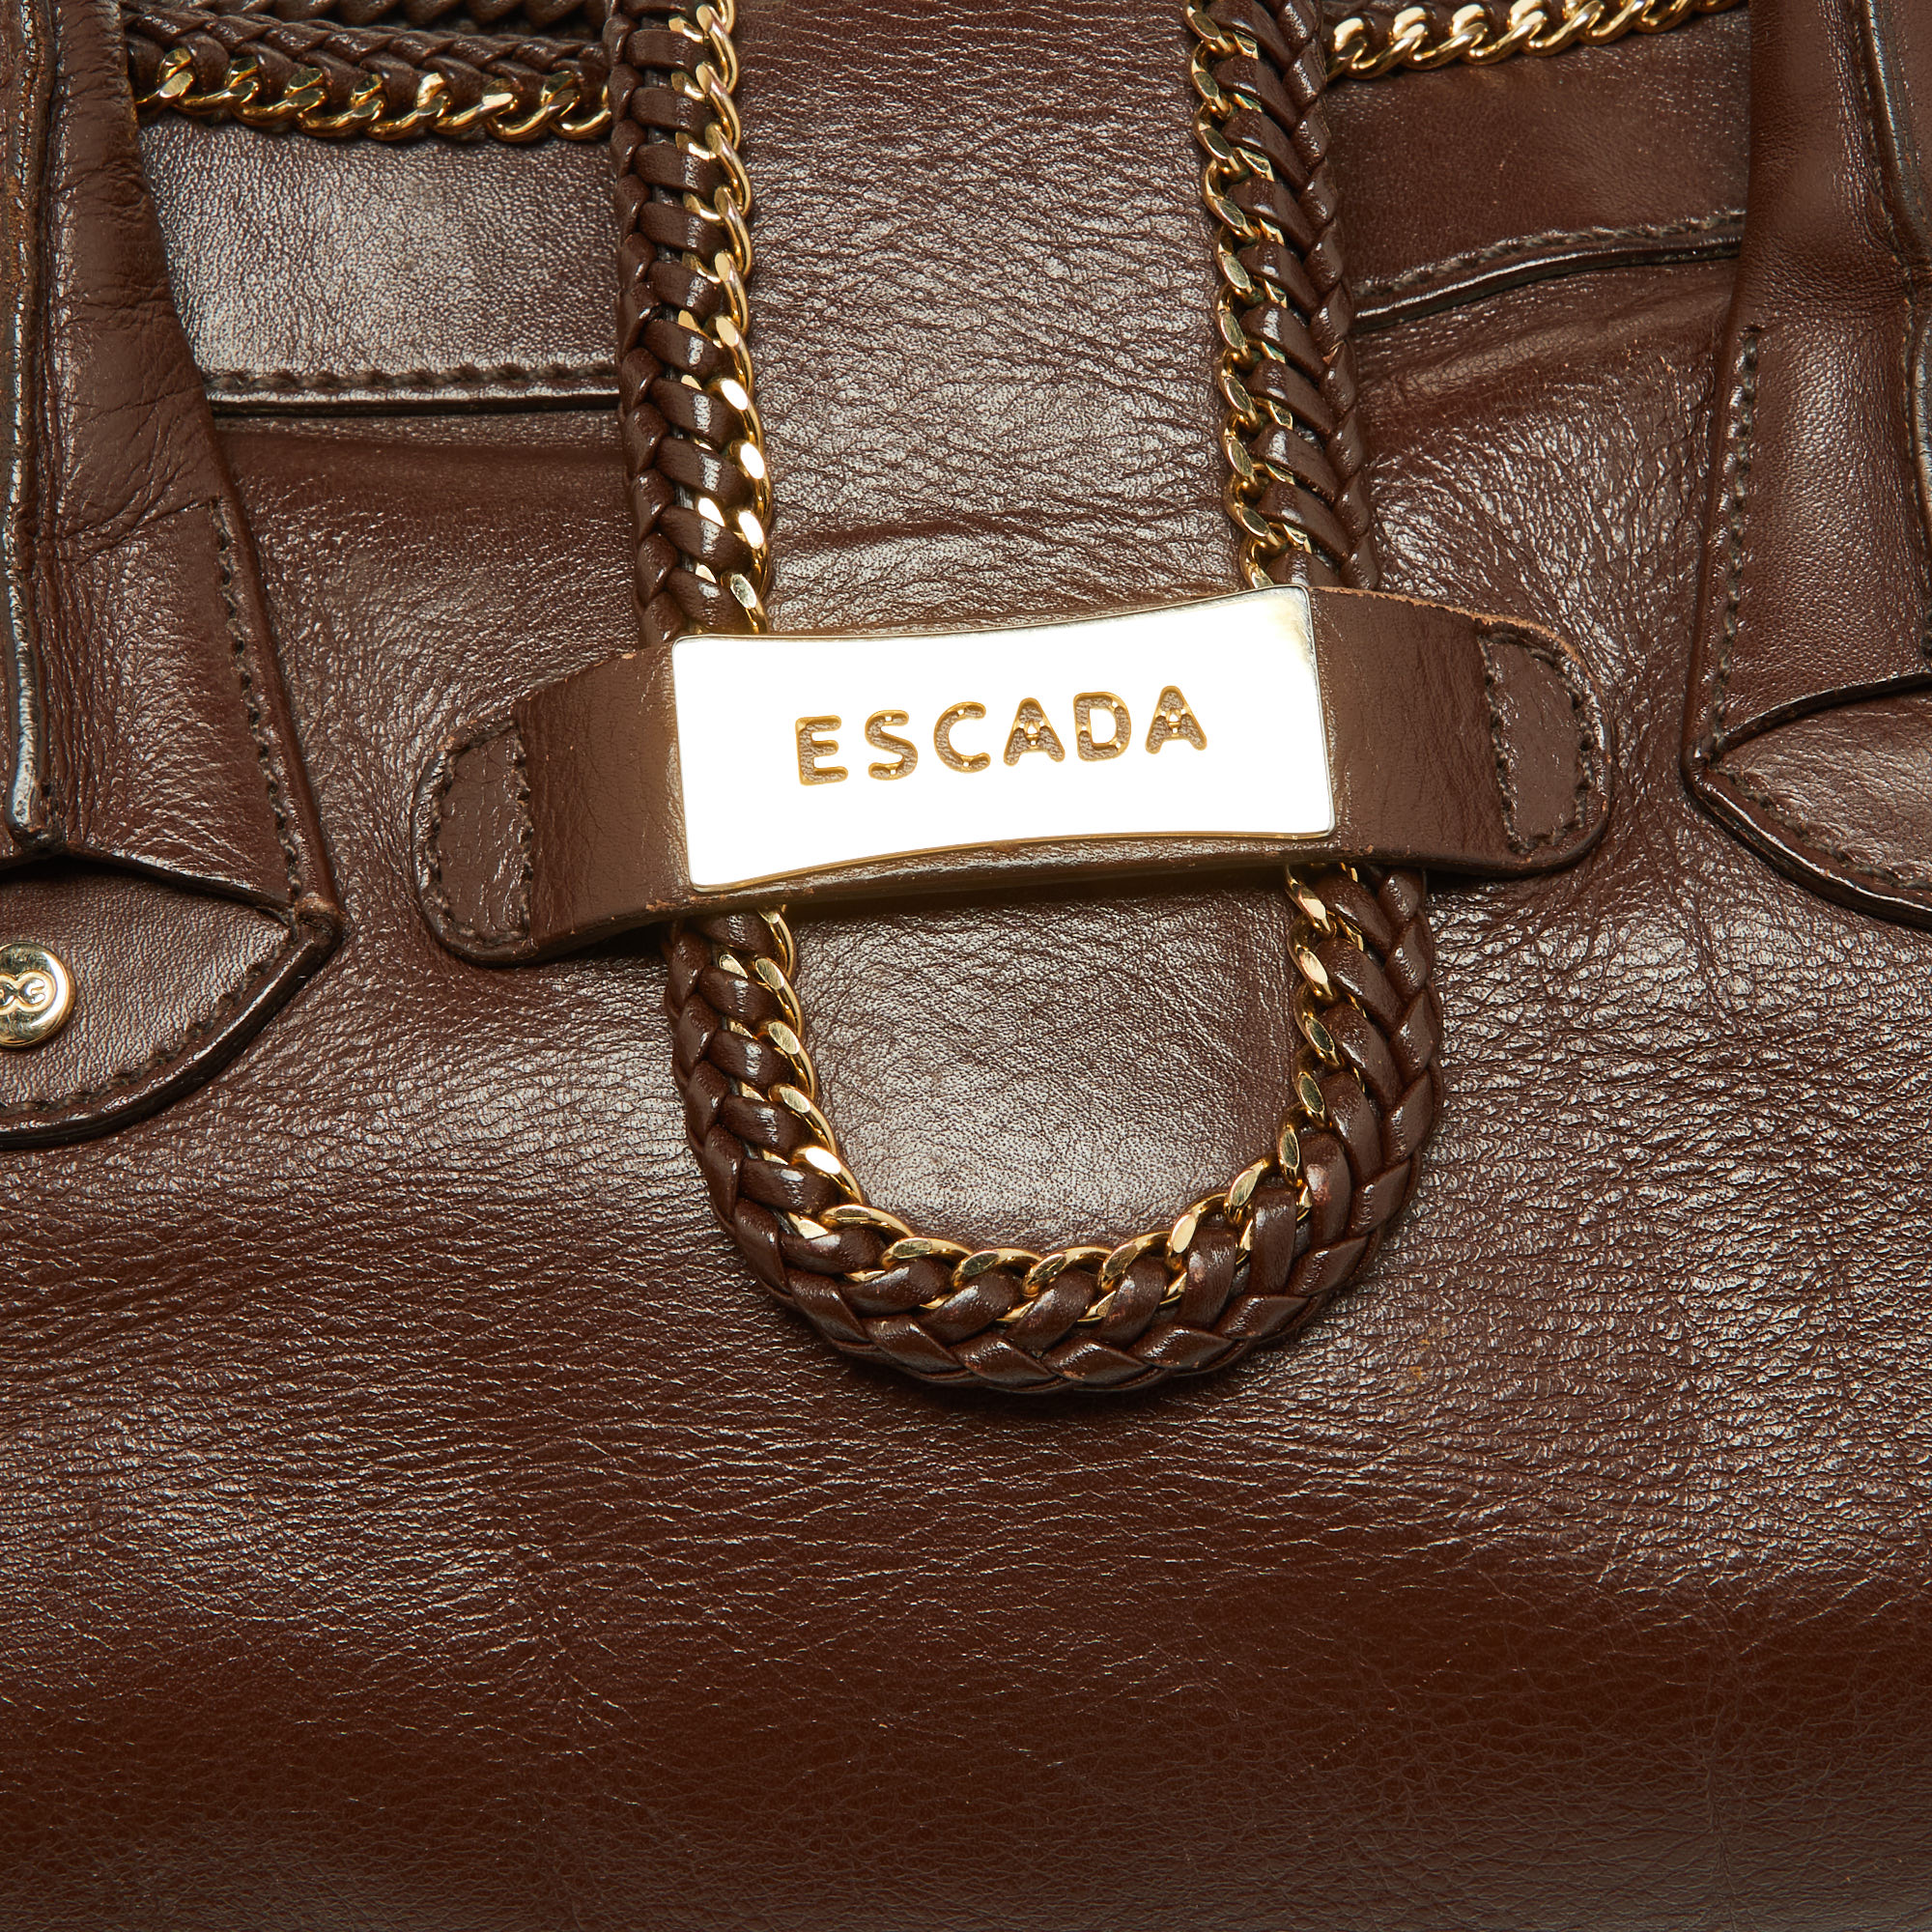 Escada Brown Leather Chain Satchel